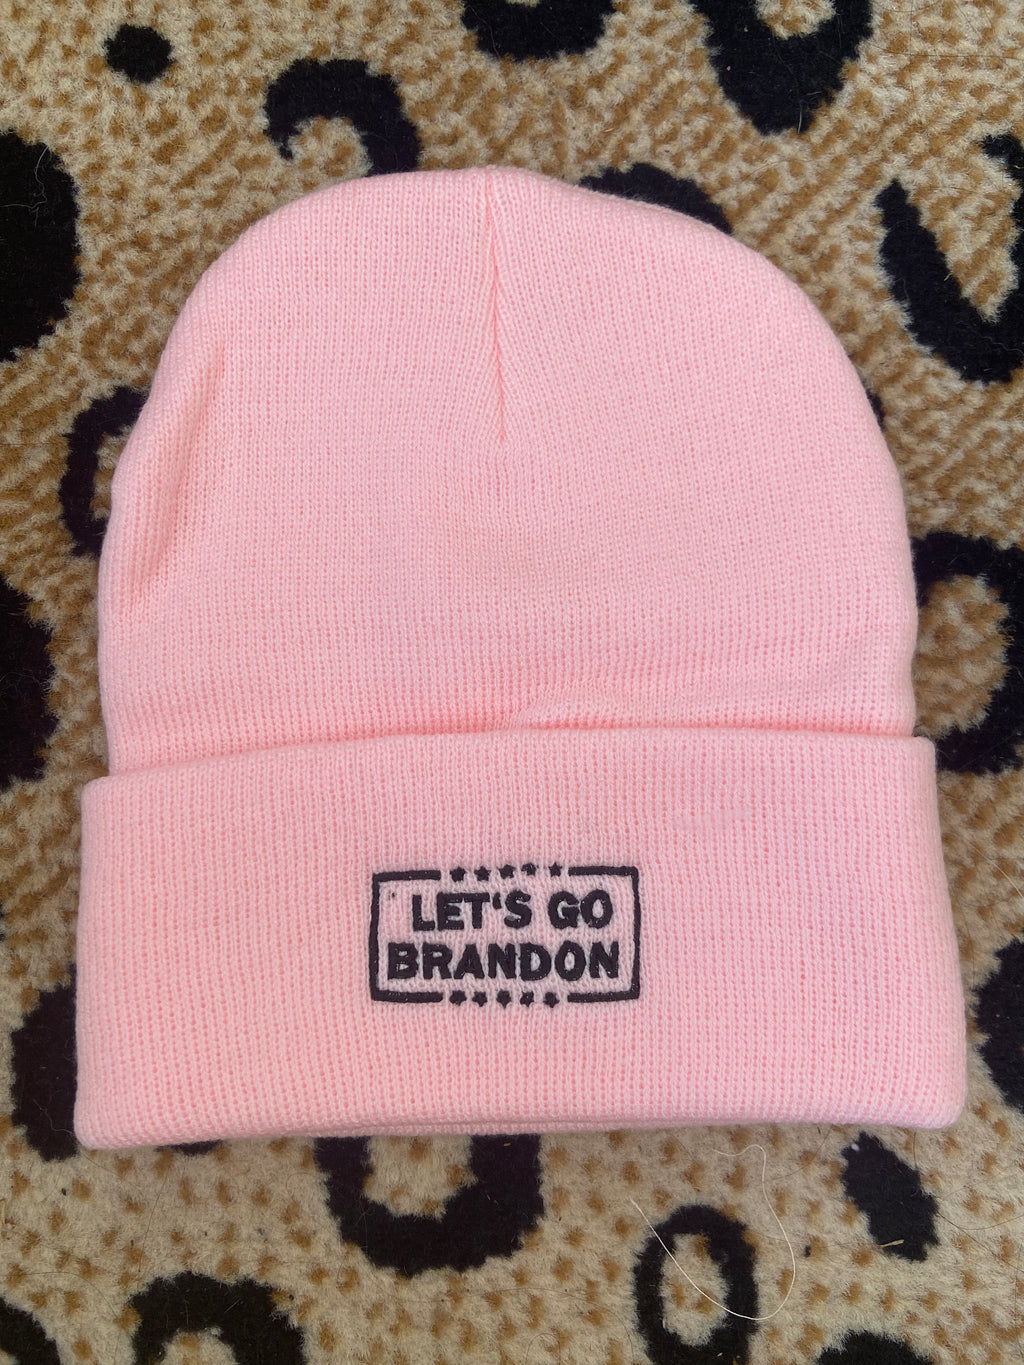 Lets go Brandon light pink beanie